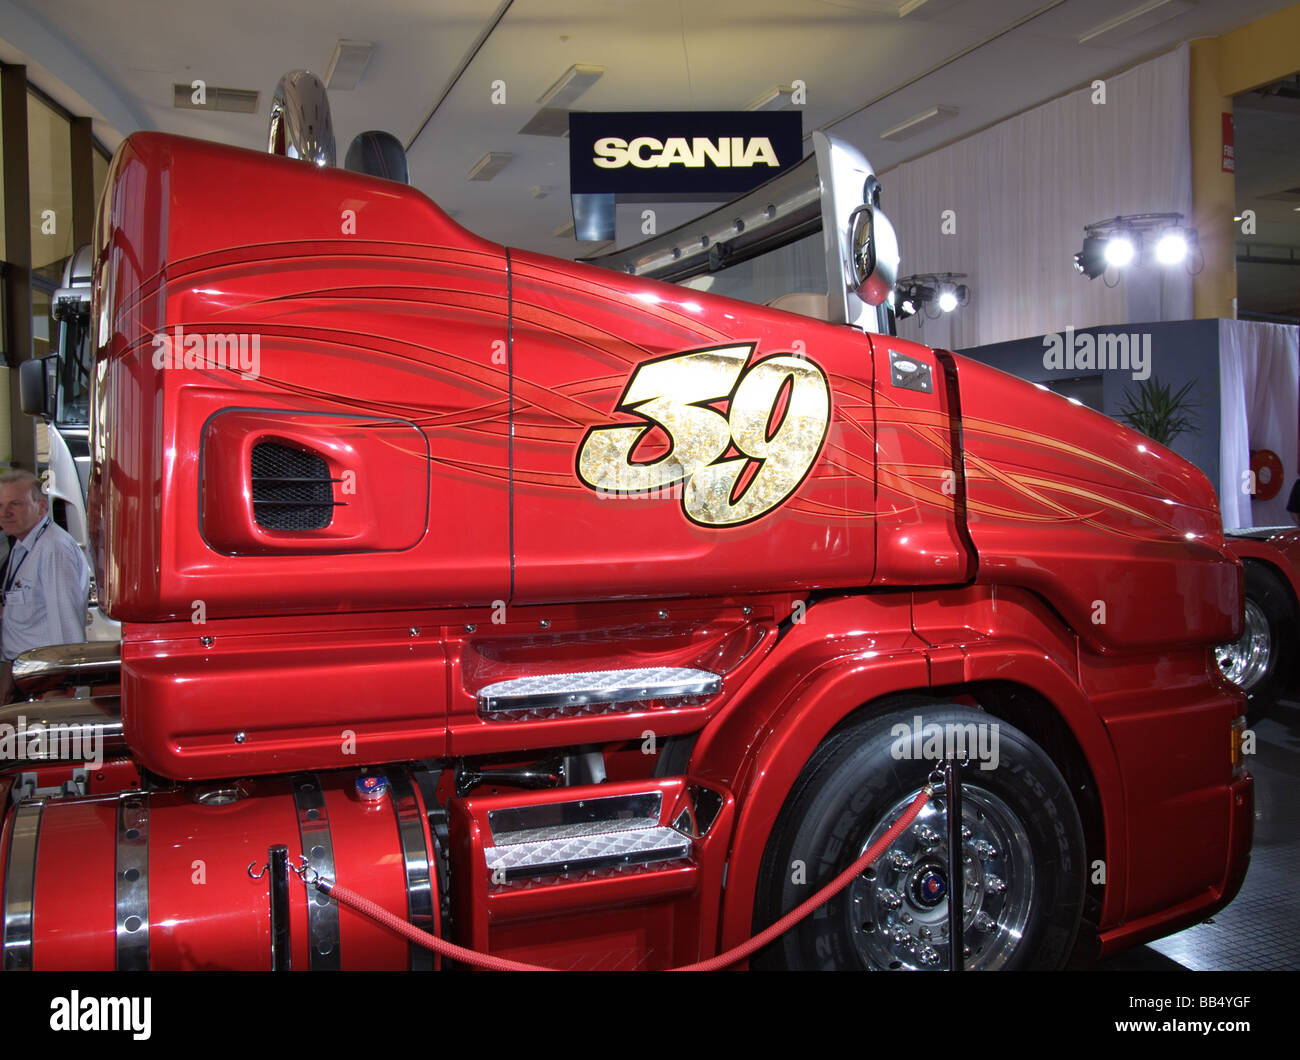 Scania Concept Truck